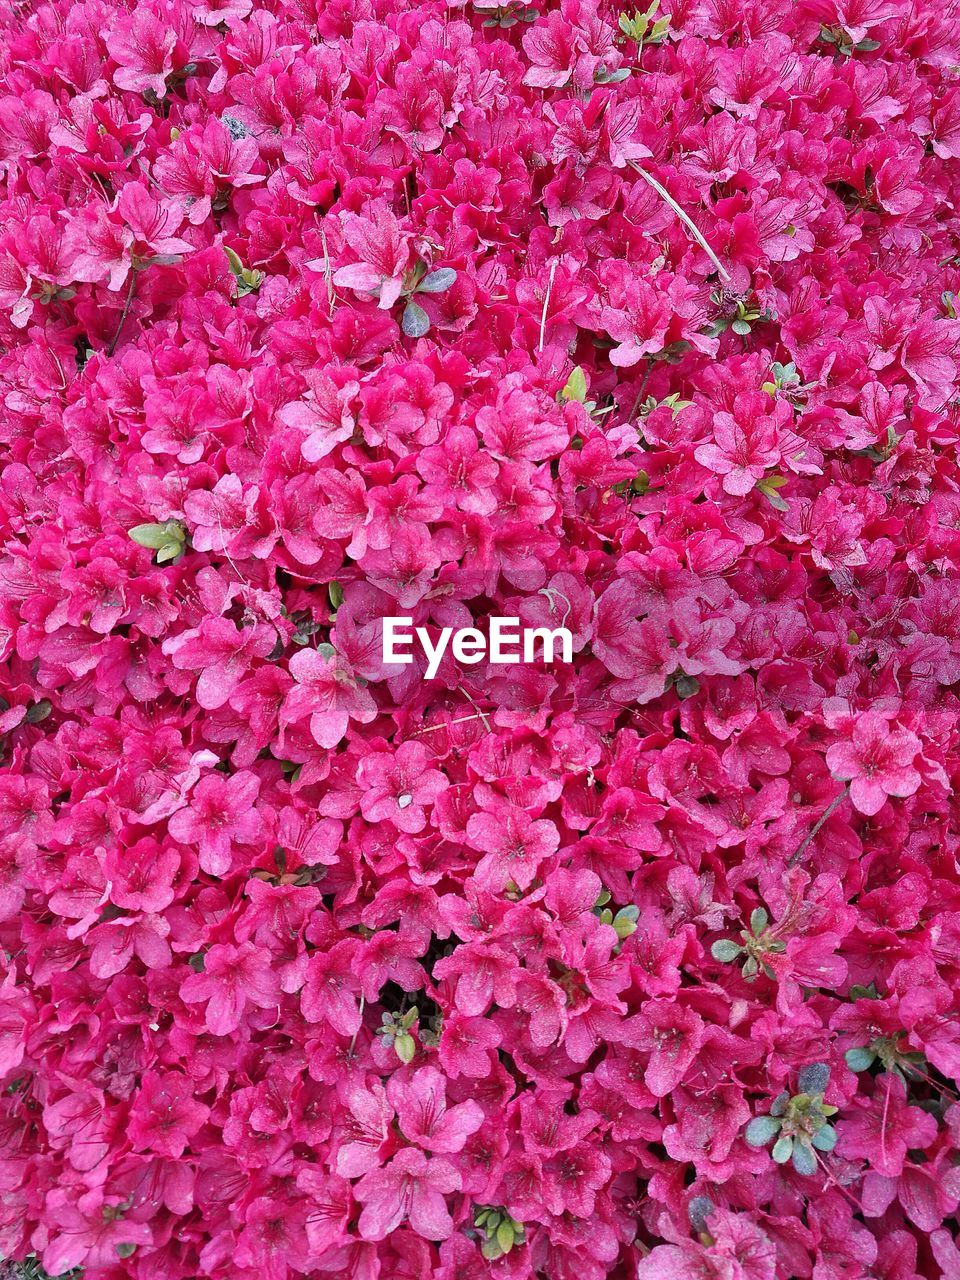 Pink flowers blooming outdoors